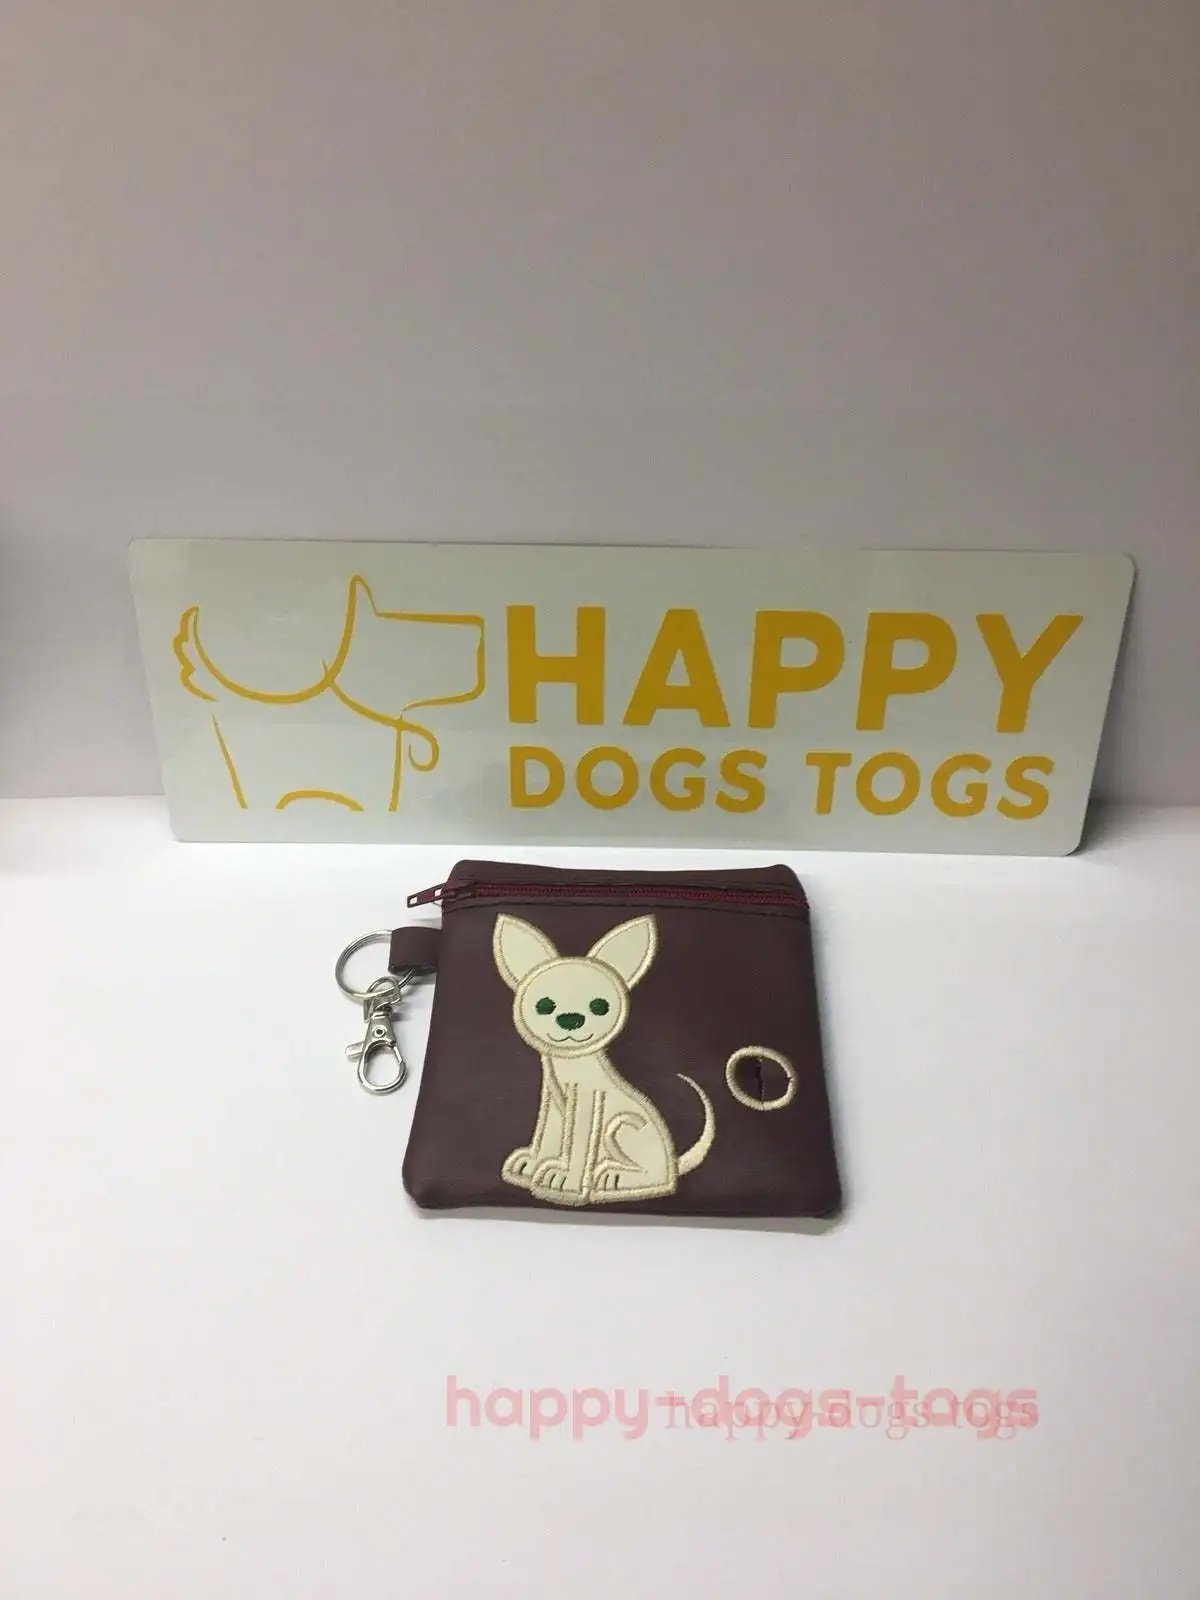 Burgundy Chihuahua sitting embroidered Dog poo bag dispenser